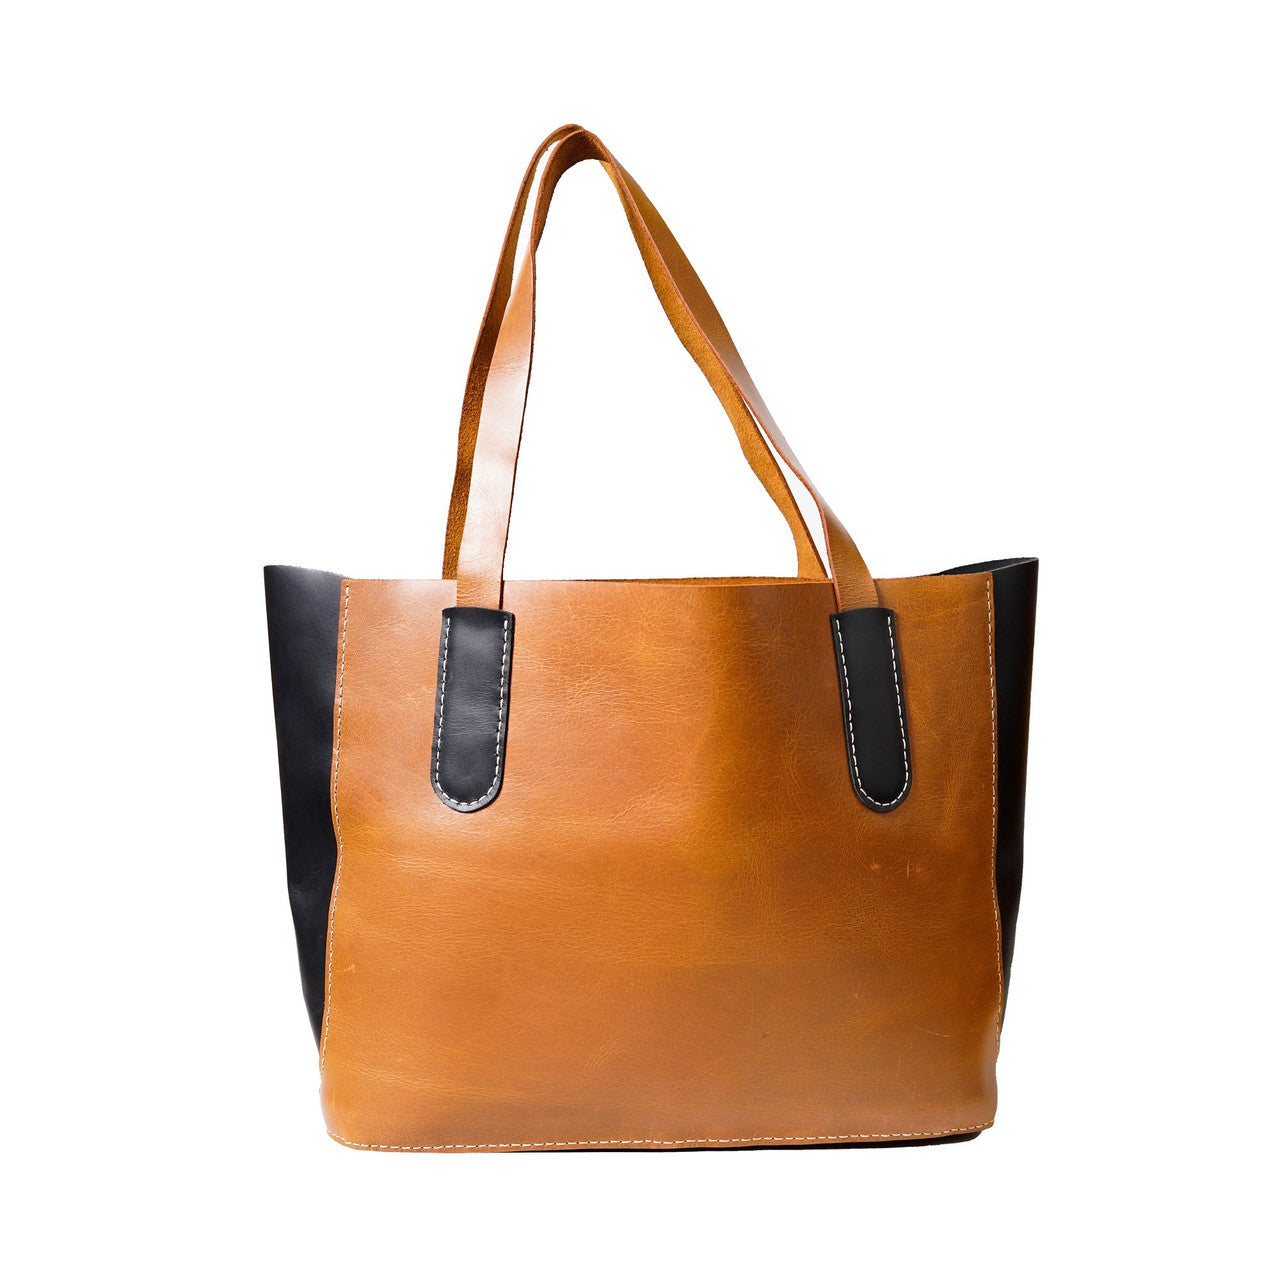 leather bag,leather tote bag,classic bag,brown bag,brown leather bag